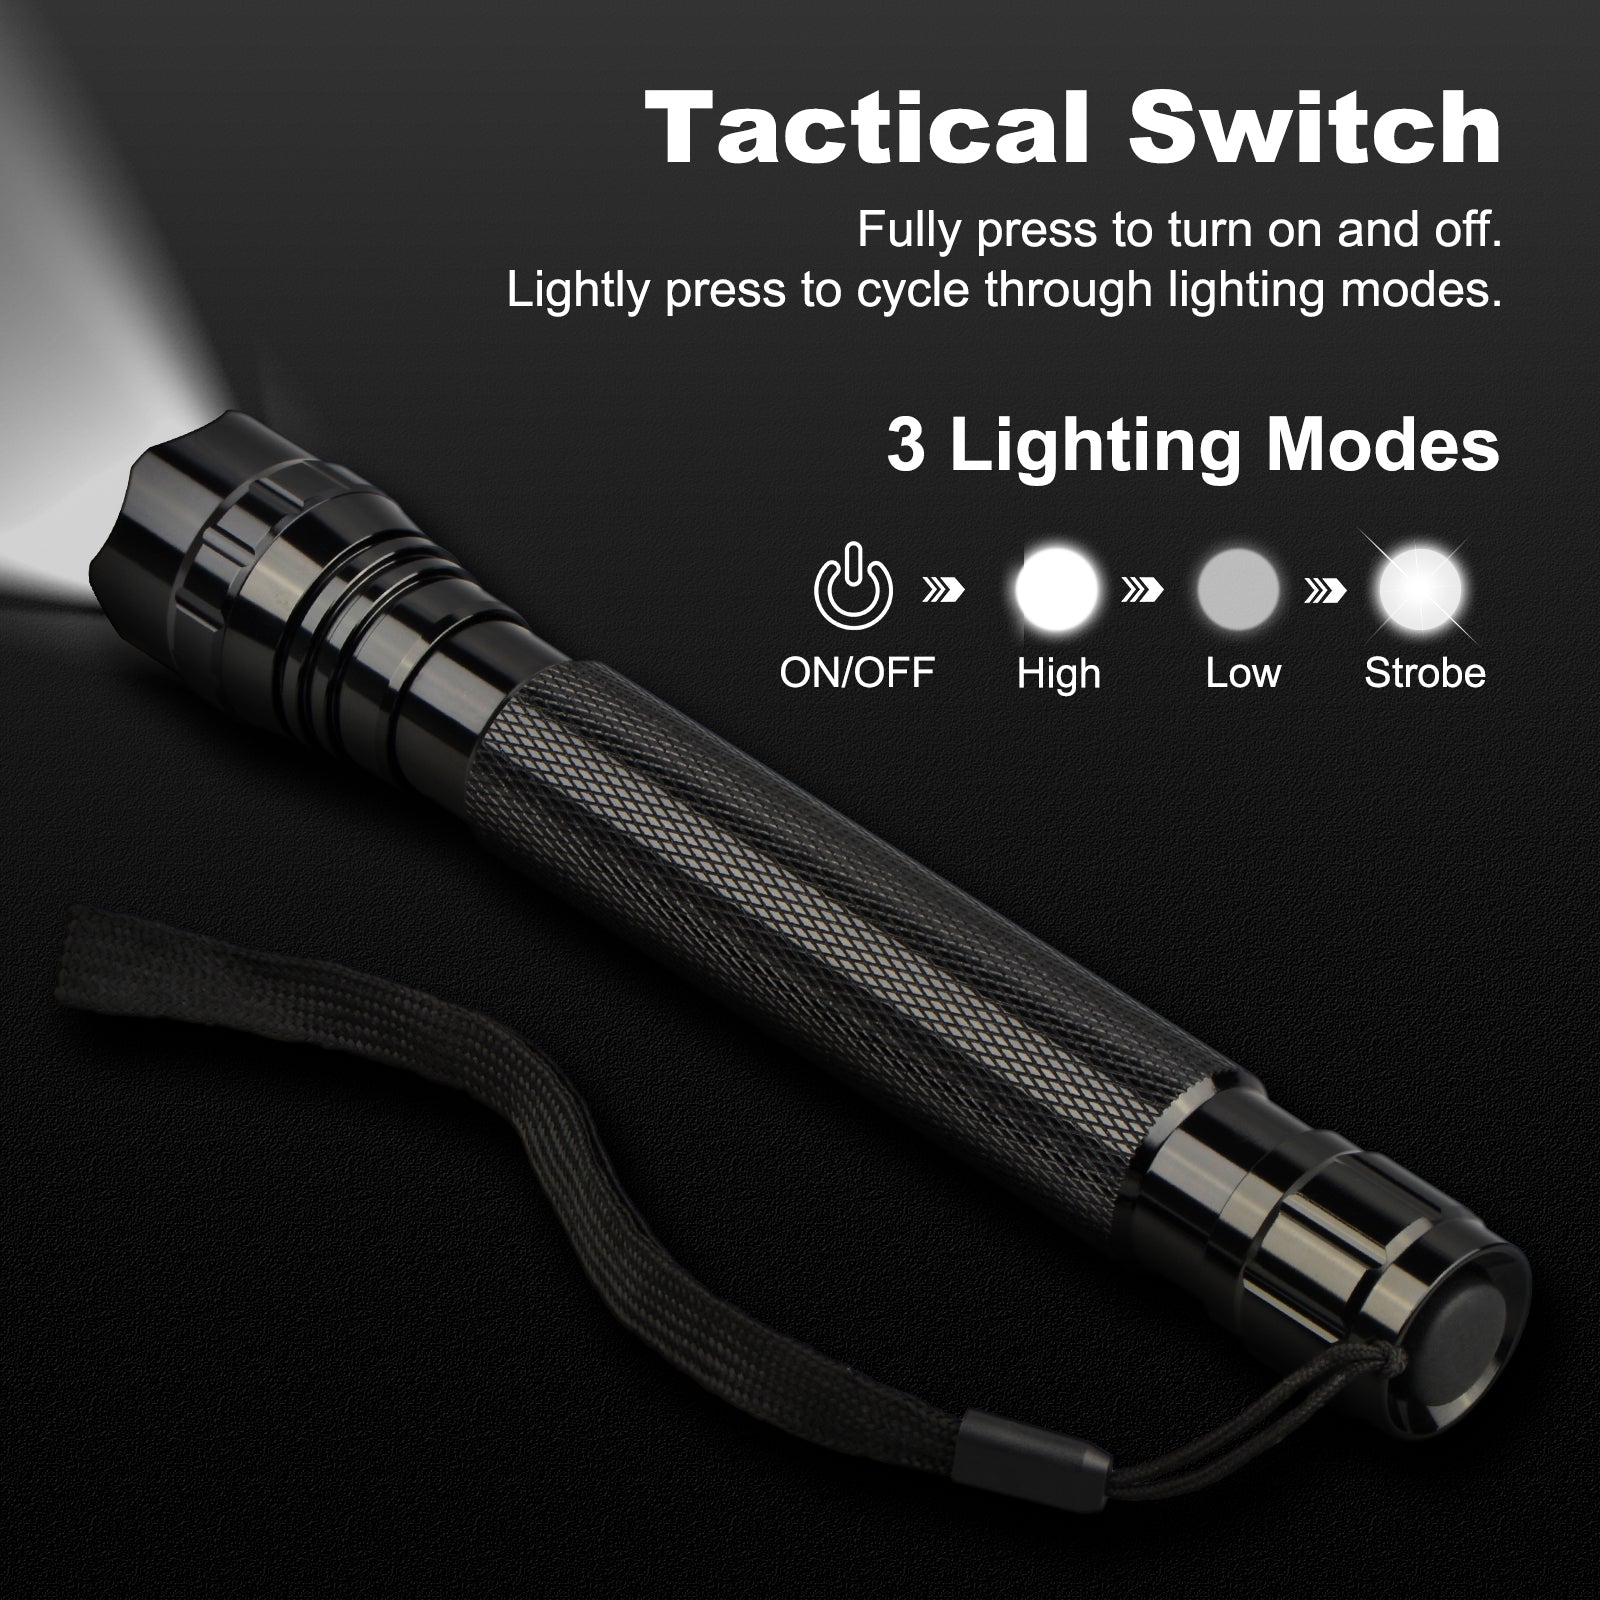 Upgraded UltraFire Classic WF-501 LED Tactical Flashlight